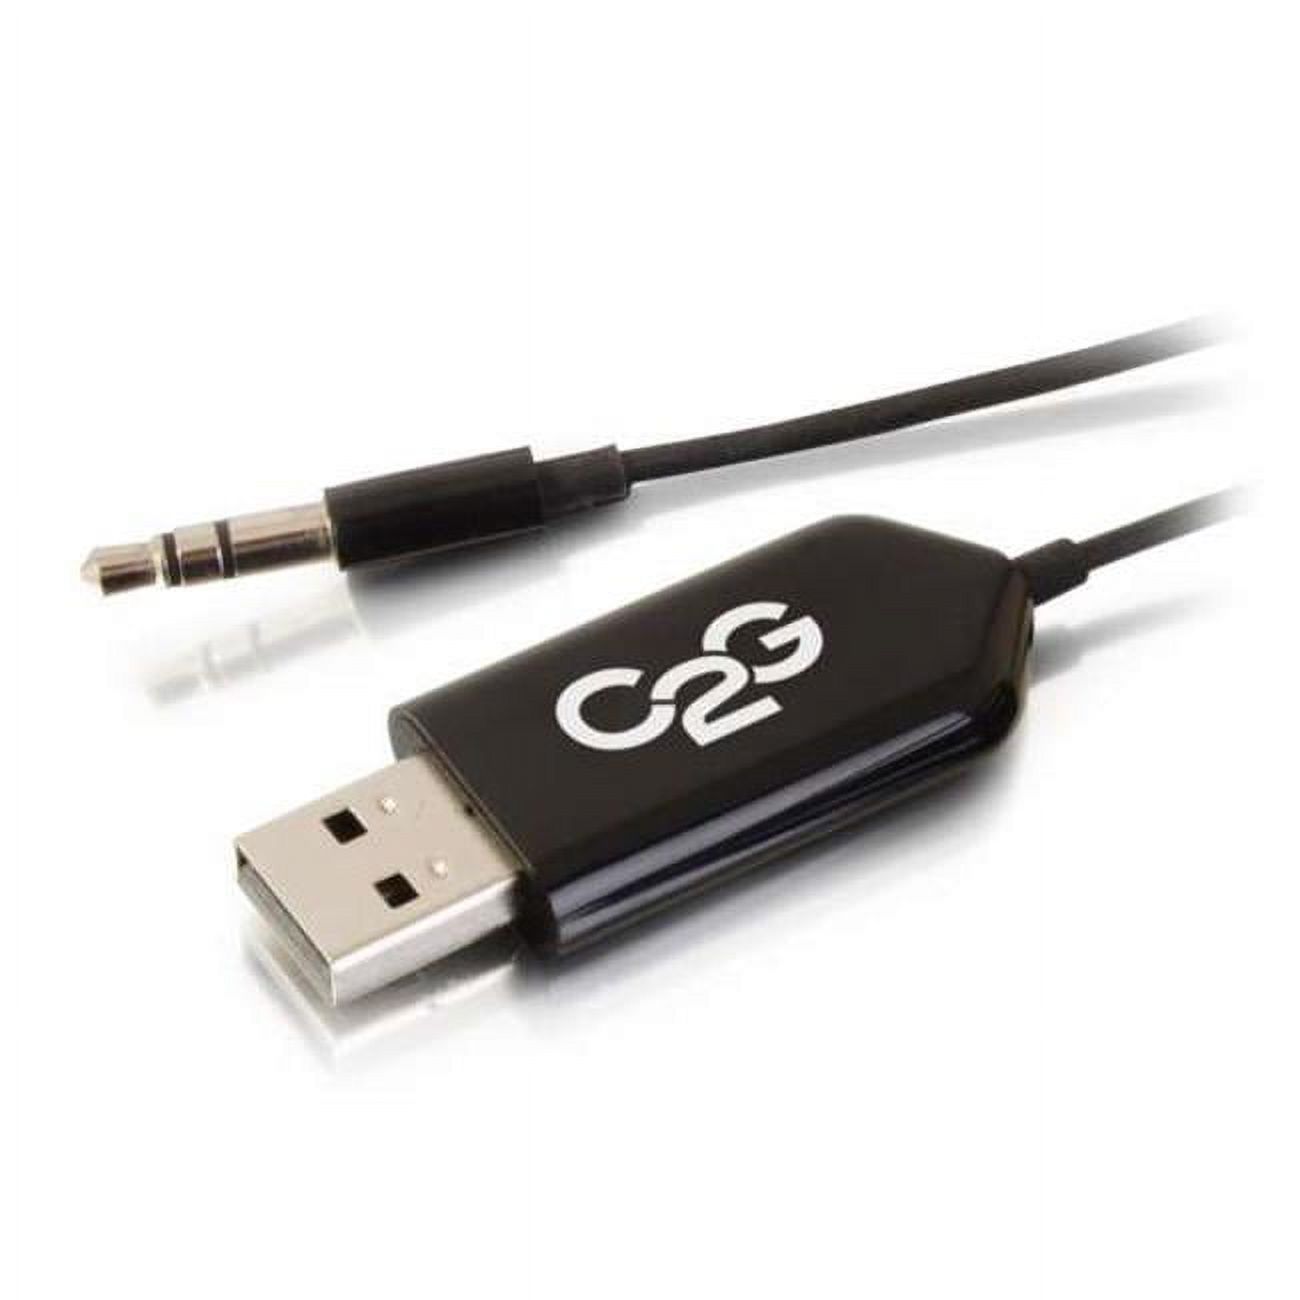 C2G Usb Bluetooth Receiver (41322) - image 1 of 3